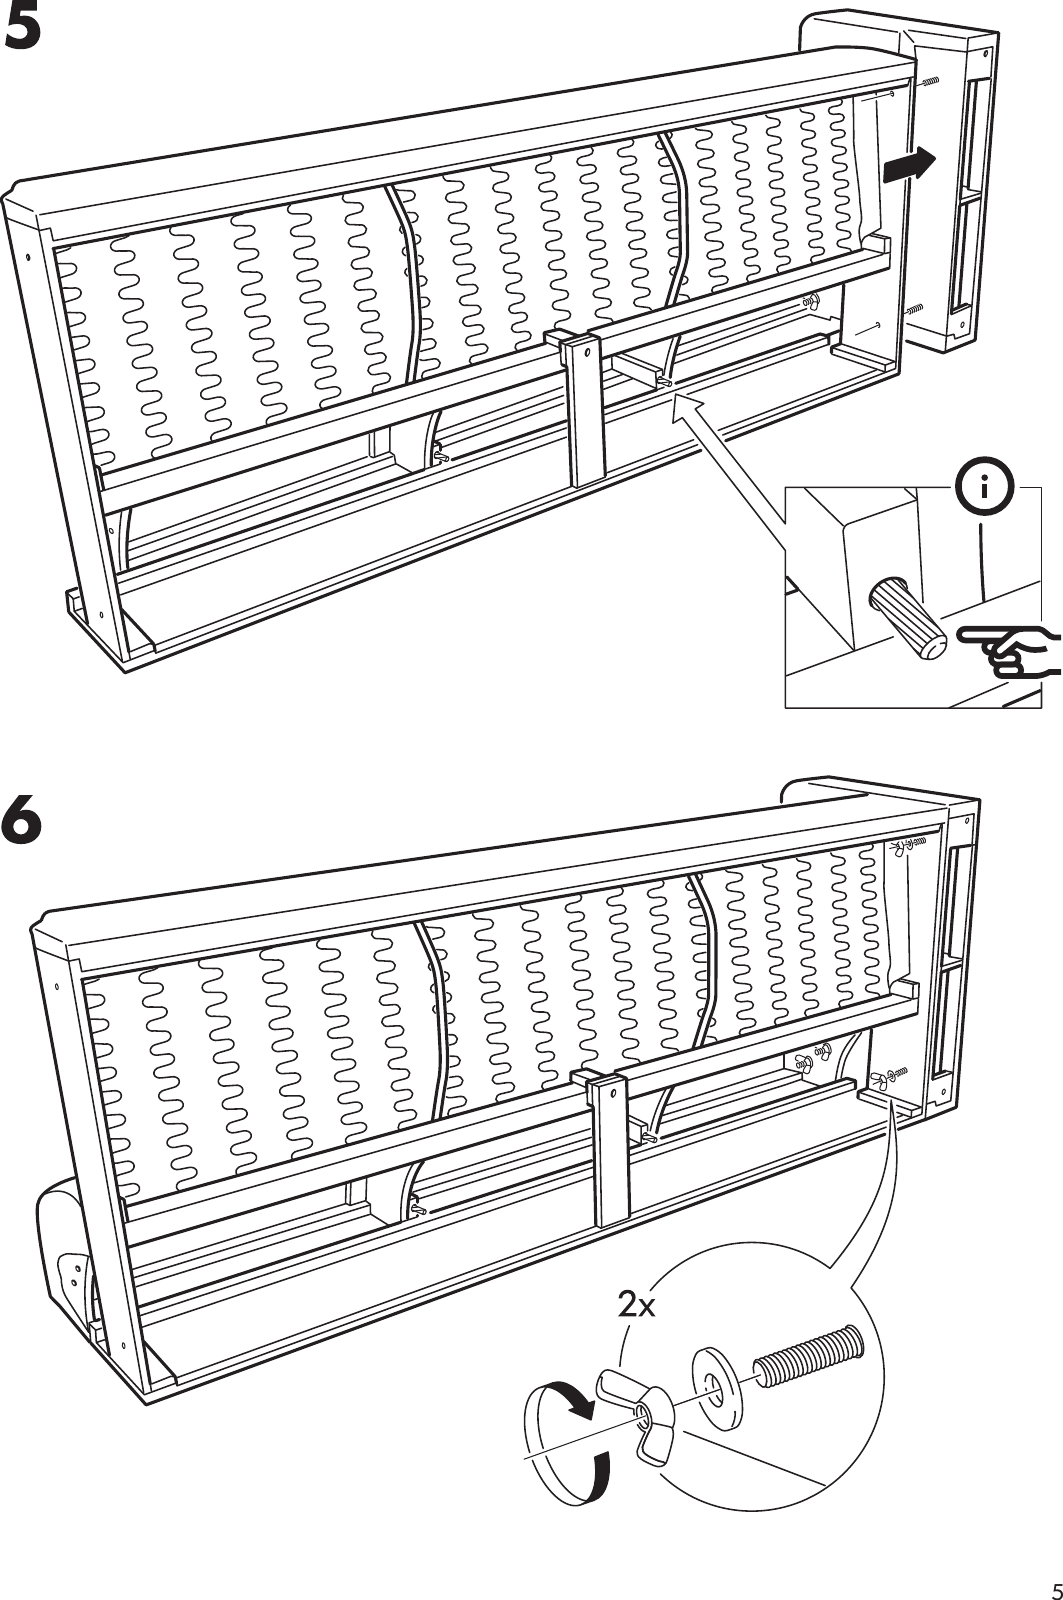 Page 5 of 8 - Ikea Ikea-Klippan-4-Seat-Sofa-Frame-Assembly-Instruction